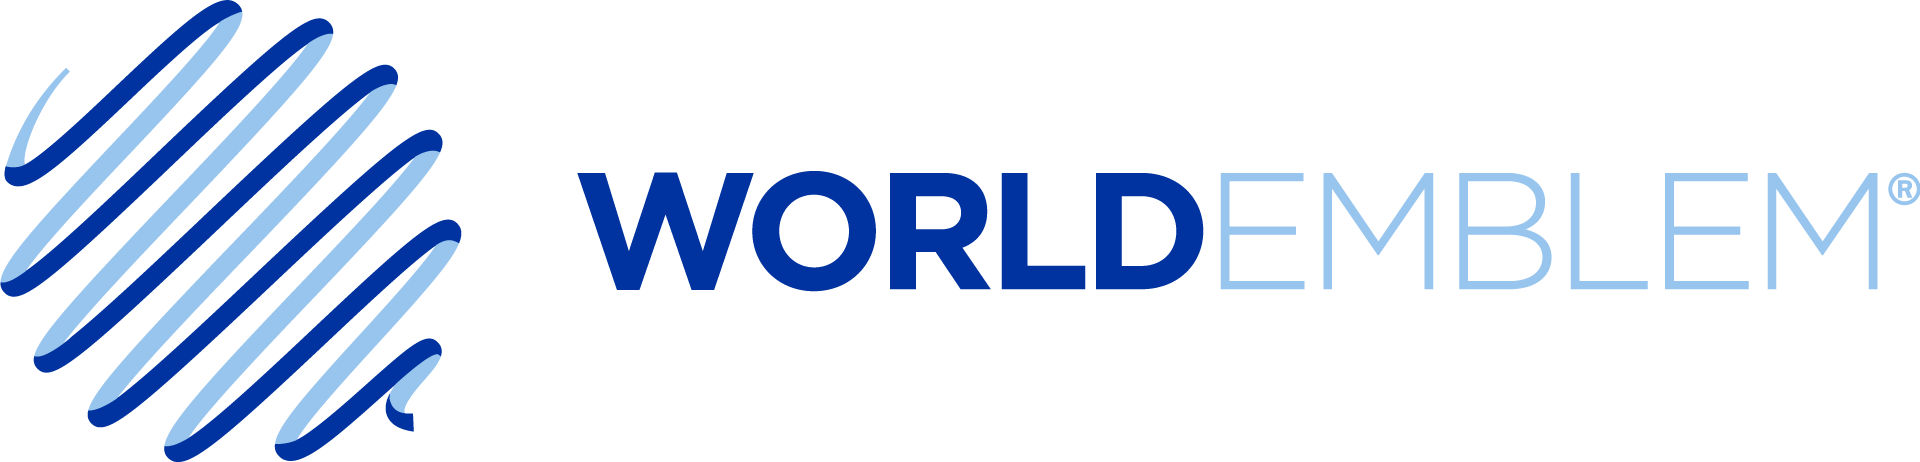 World-Emblem.png